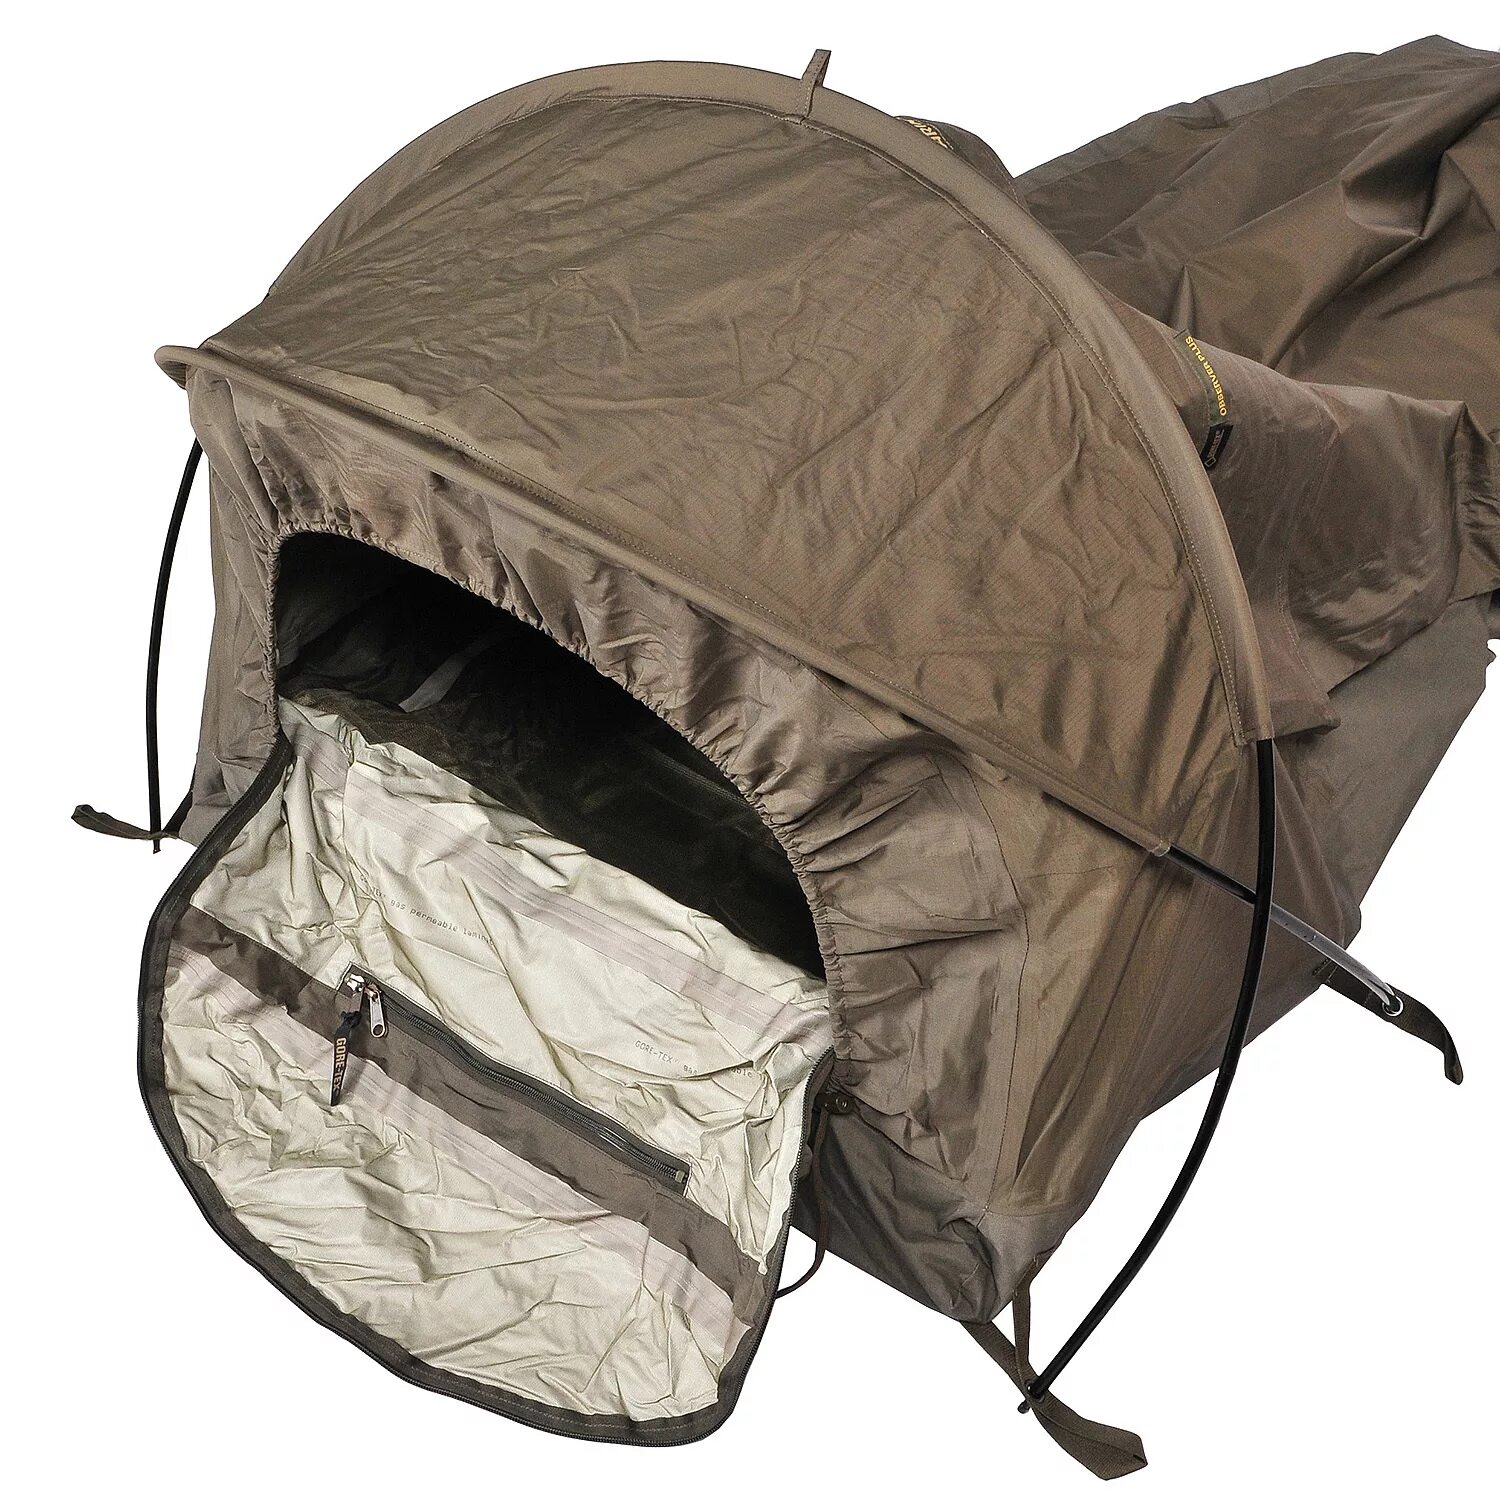 Палатки мешки купить. Палатка Carinthia Observer Plus. Бивачный мешок Carinthia. Спальный мешок палатка Carinthia. Палатка тактическая Carinthia Observer Plus.